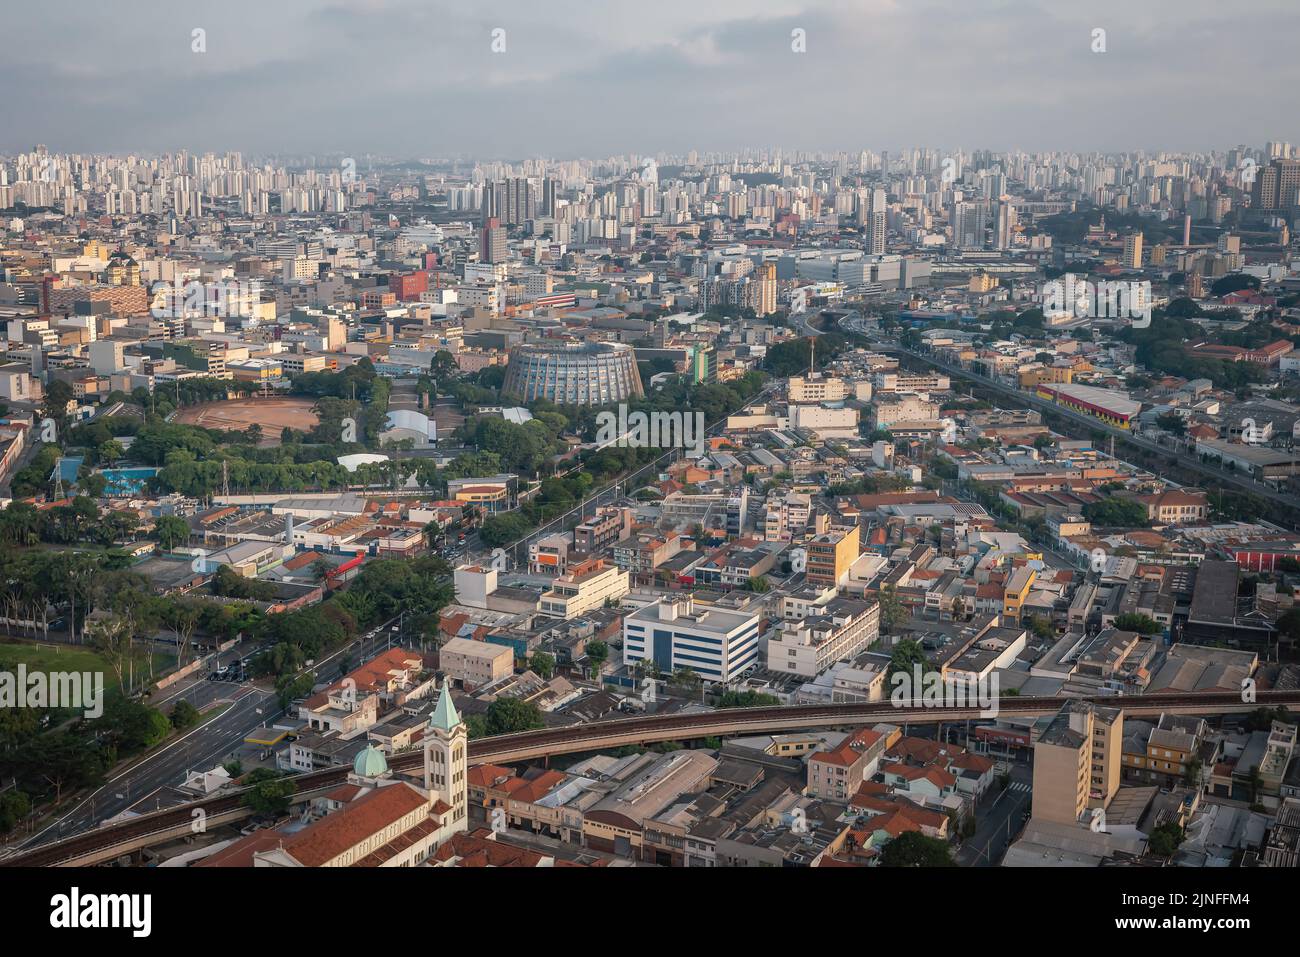 Aerial view of Sao Paulo and Military Police Administrative Center (Panelao da Policia Militar) - Sao Paulo, Brazil Stock Photo